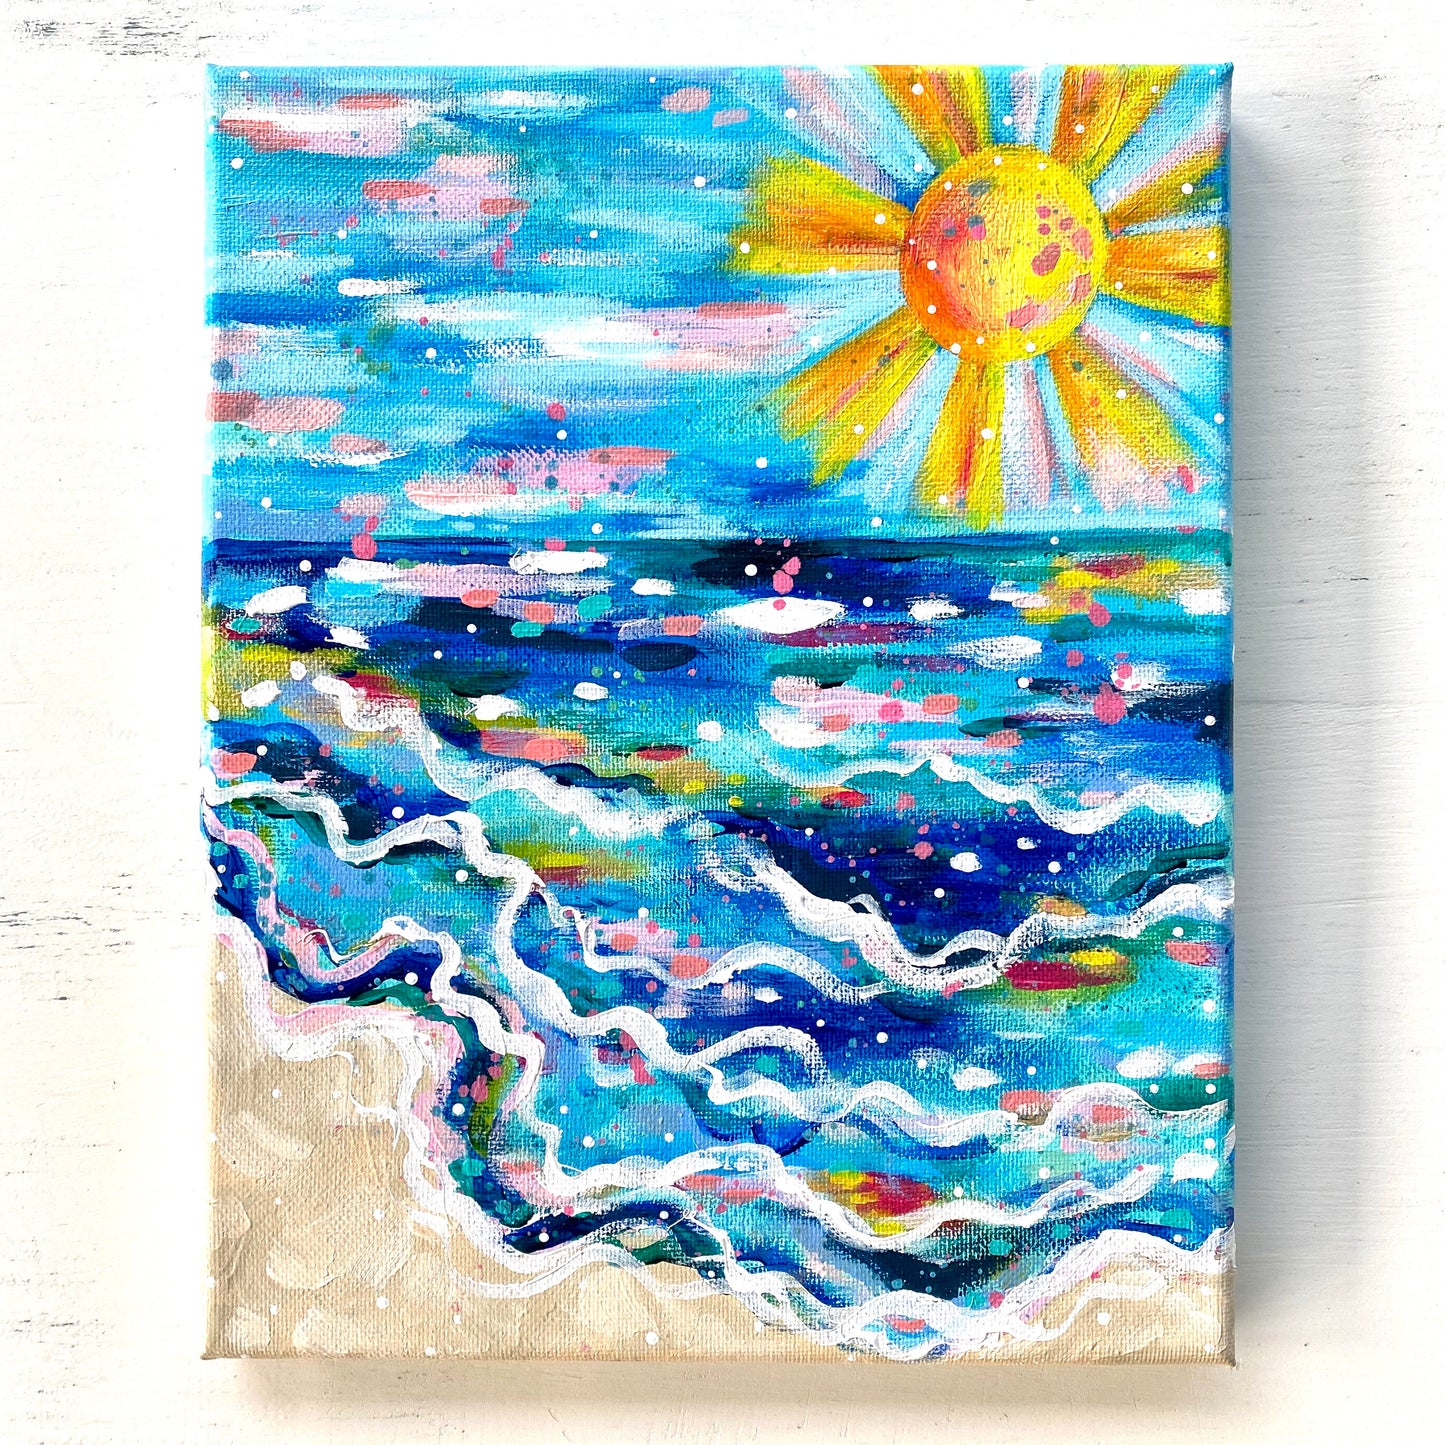 September Sunrise 8x10 inch original painting on canvas